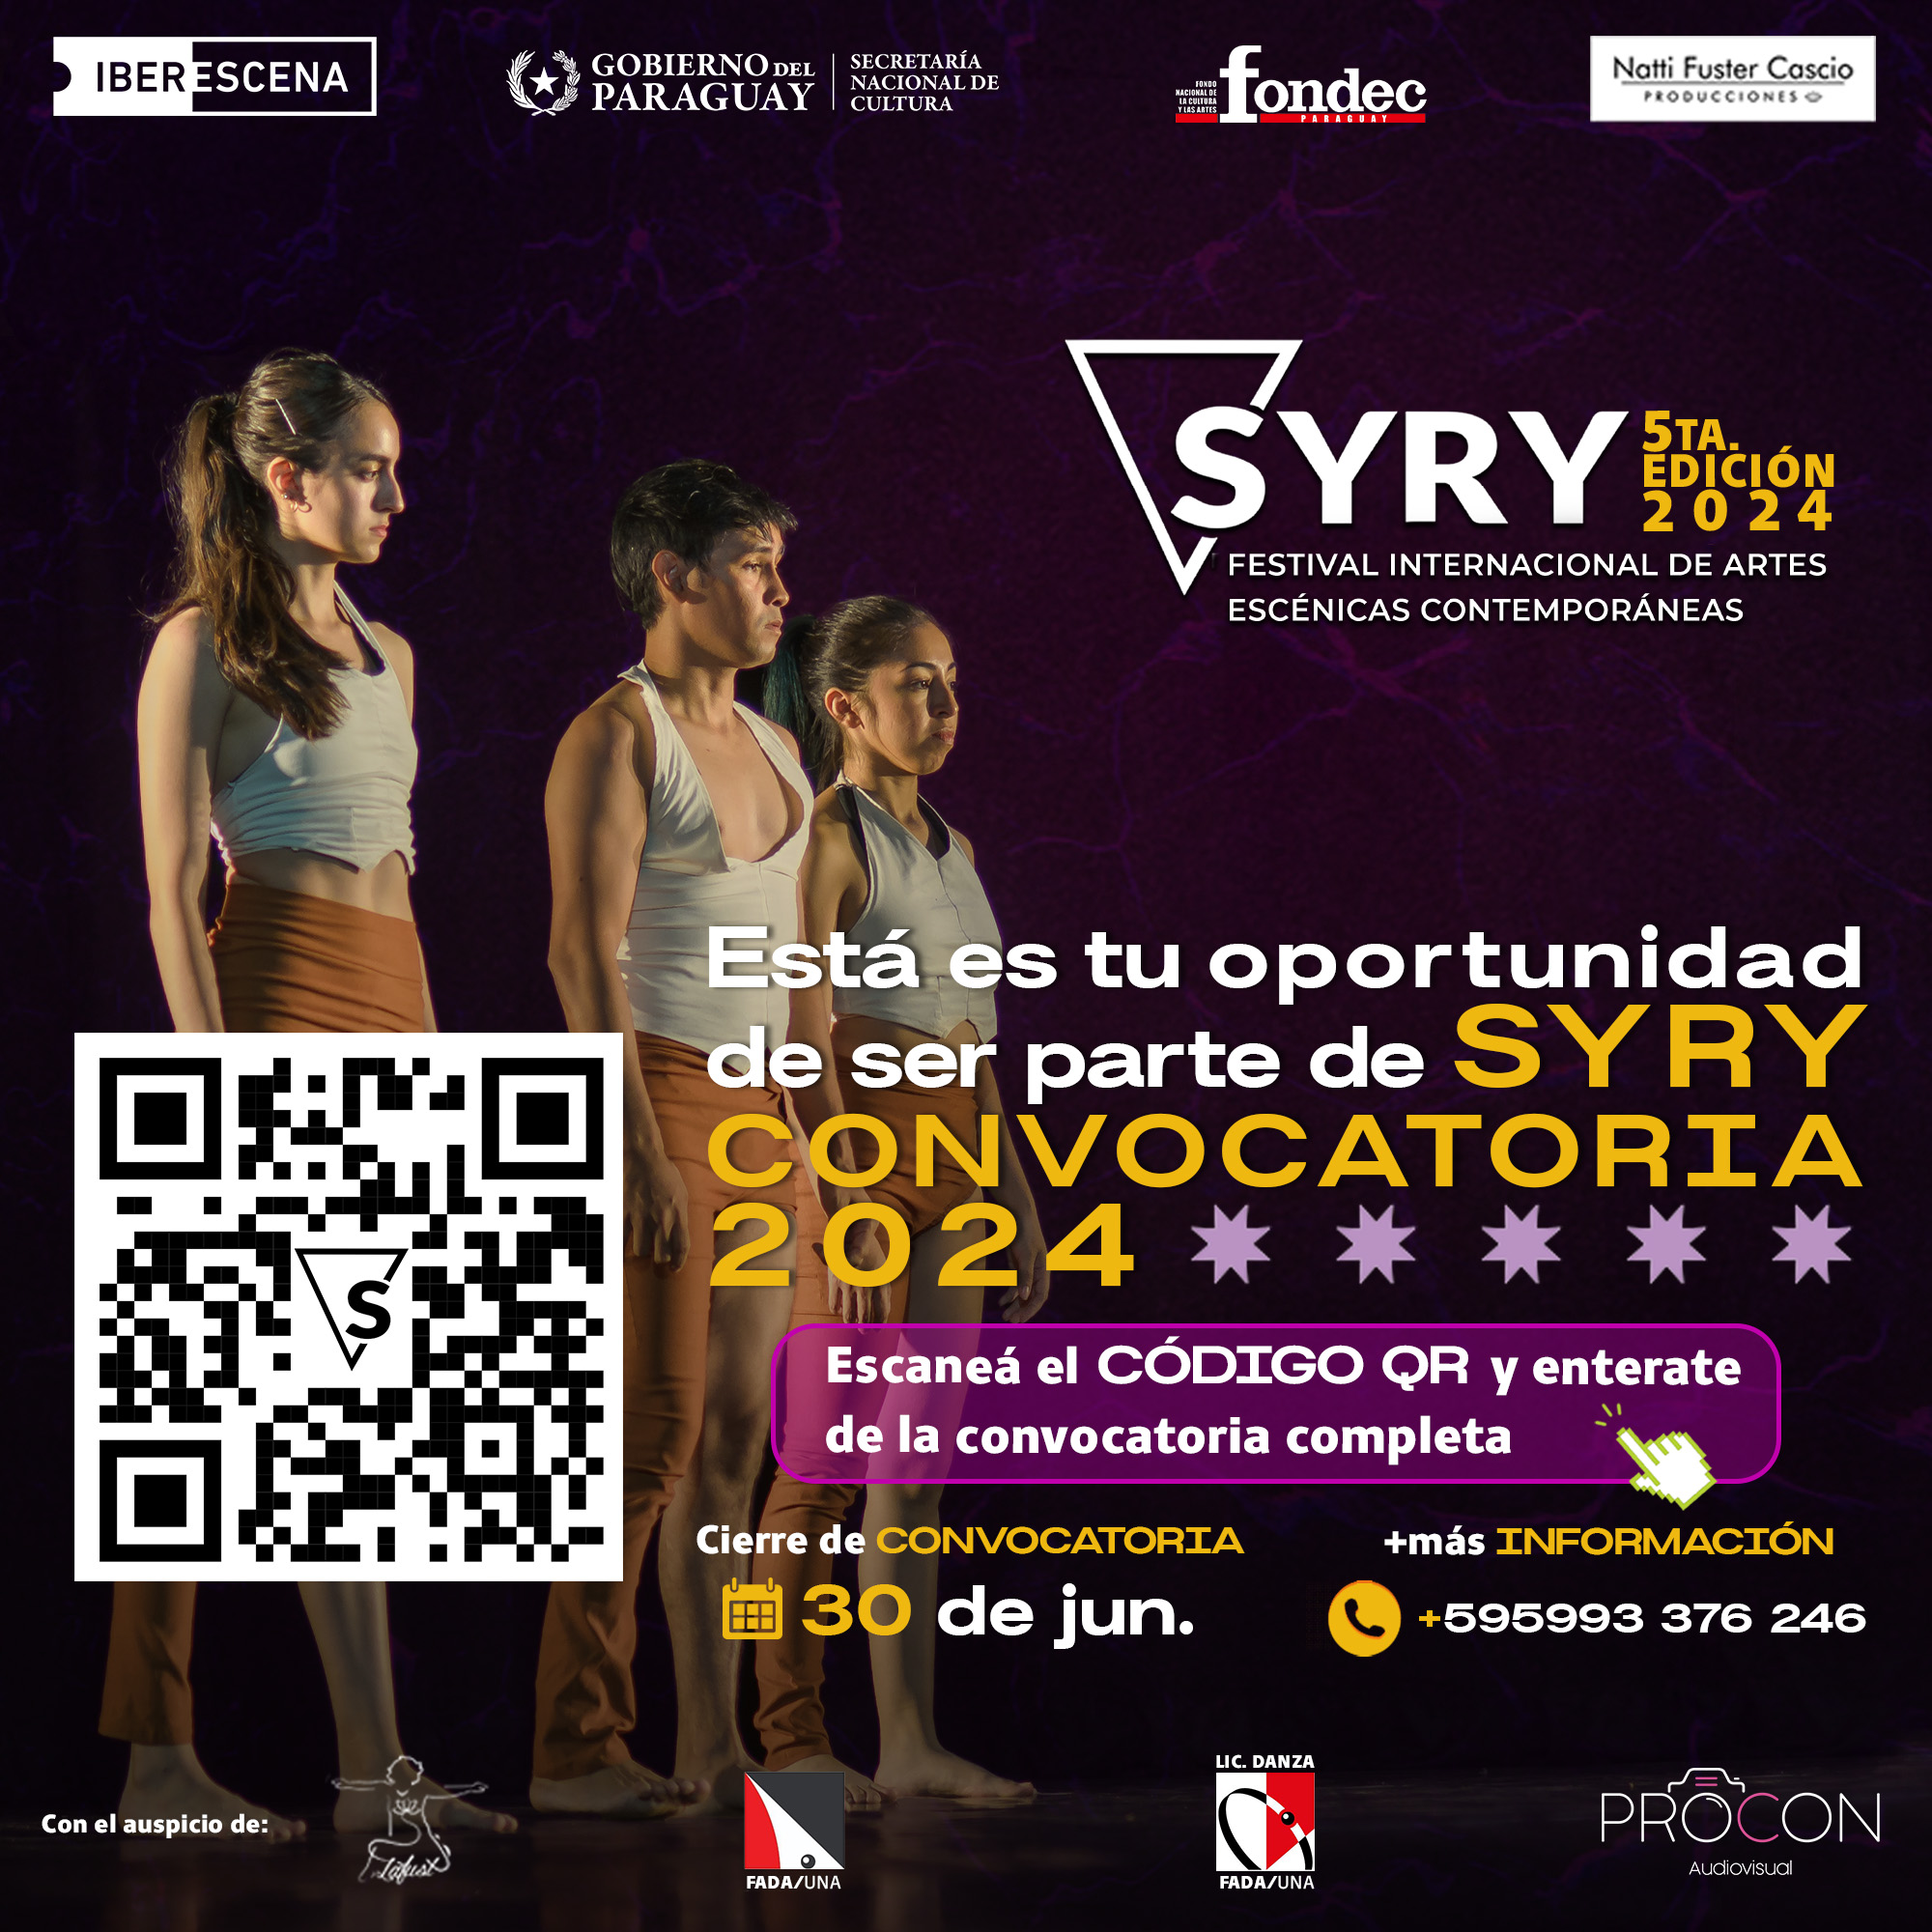 Festival Syry abre convocatoria para talentos de Artes Escénicas Contemporáneas imagen